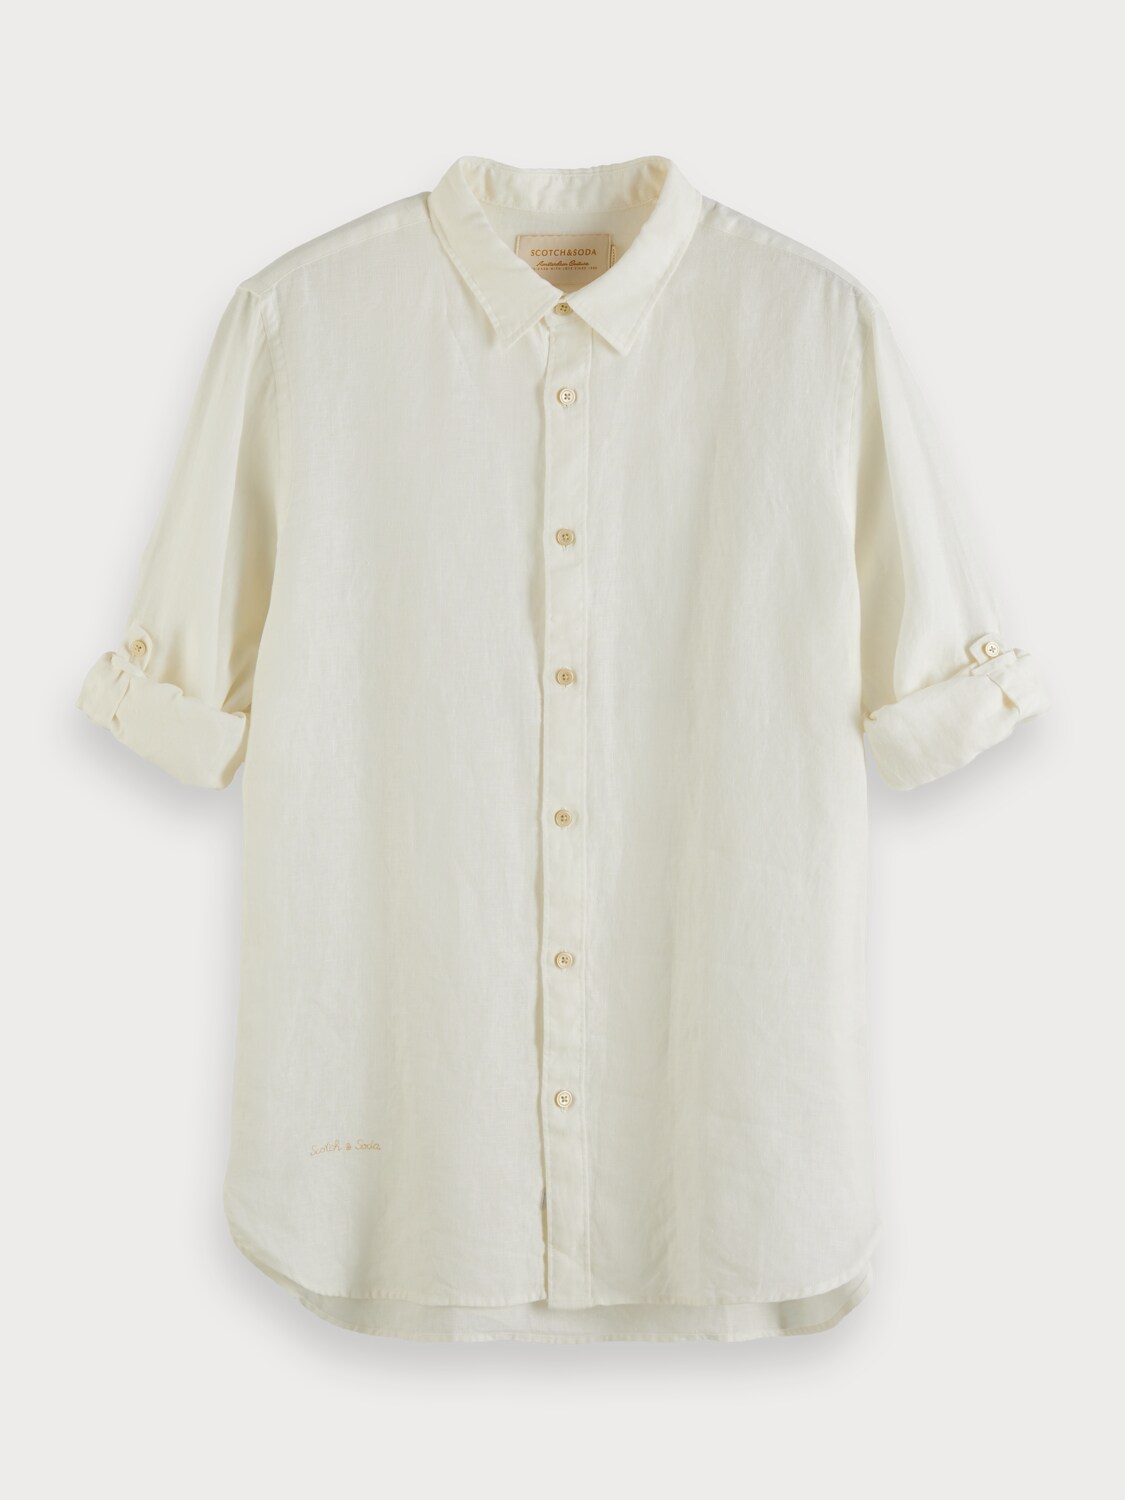 REGULAR FIT- Garment-dyed linen shirt with sleeve roll-up